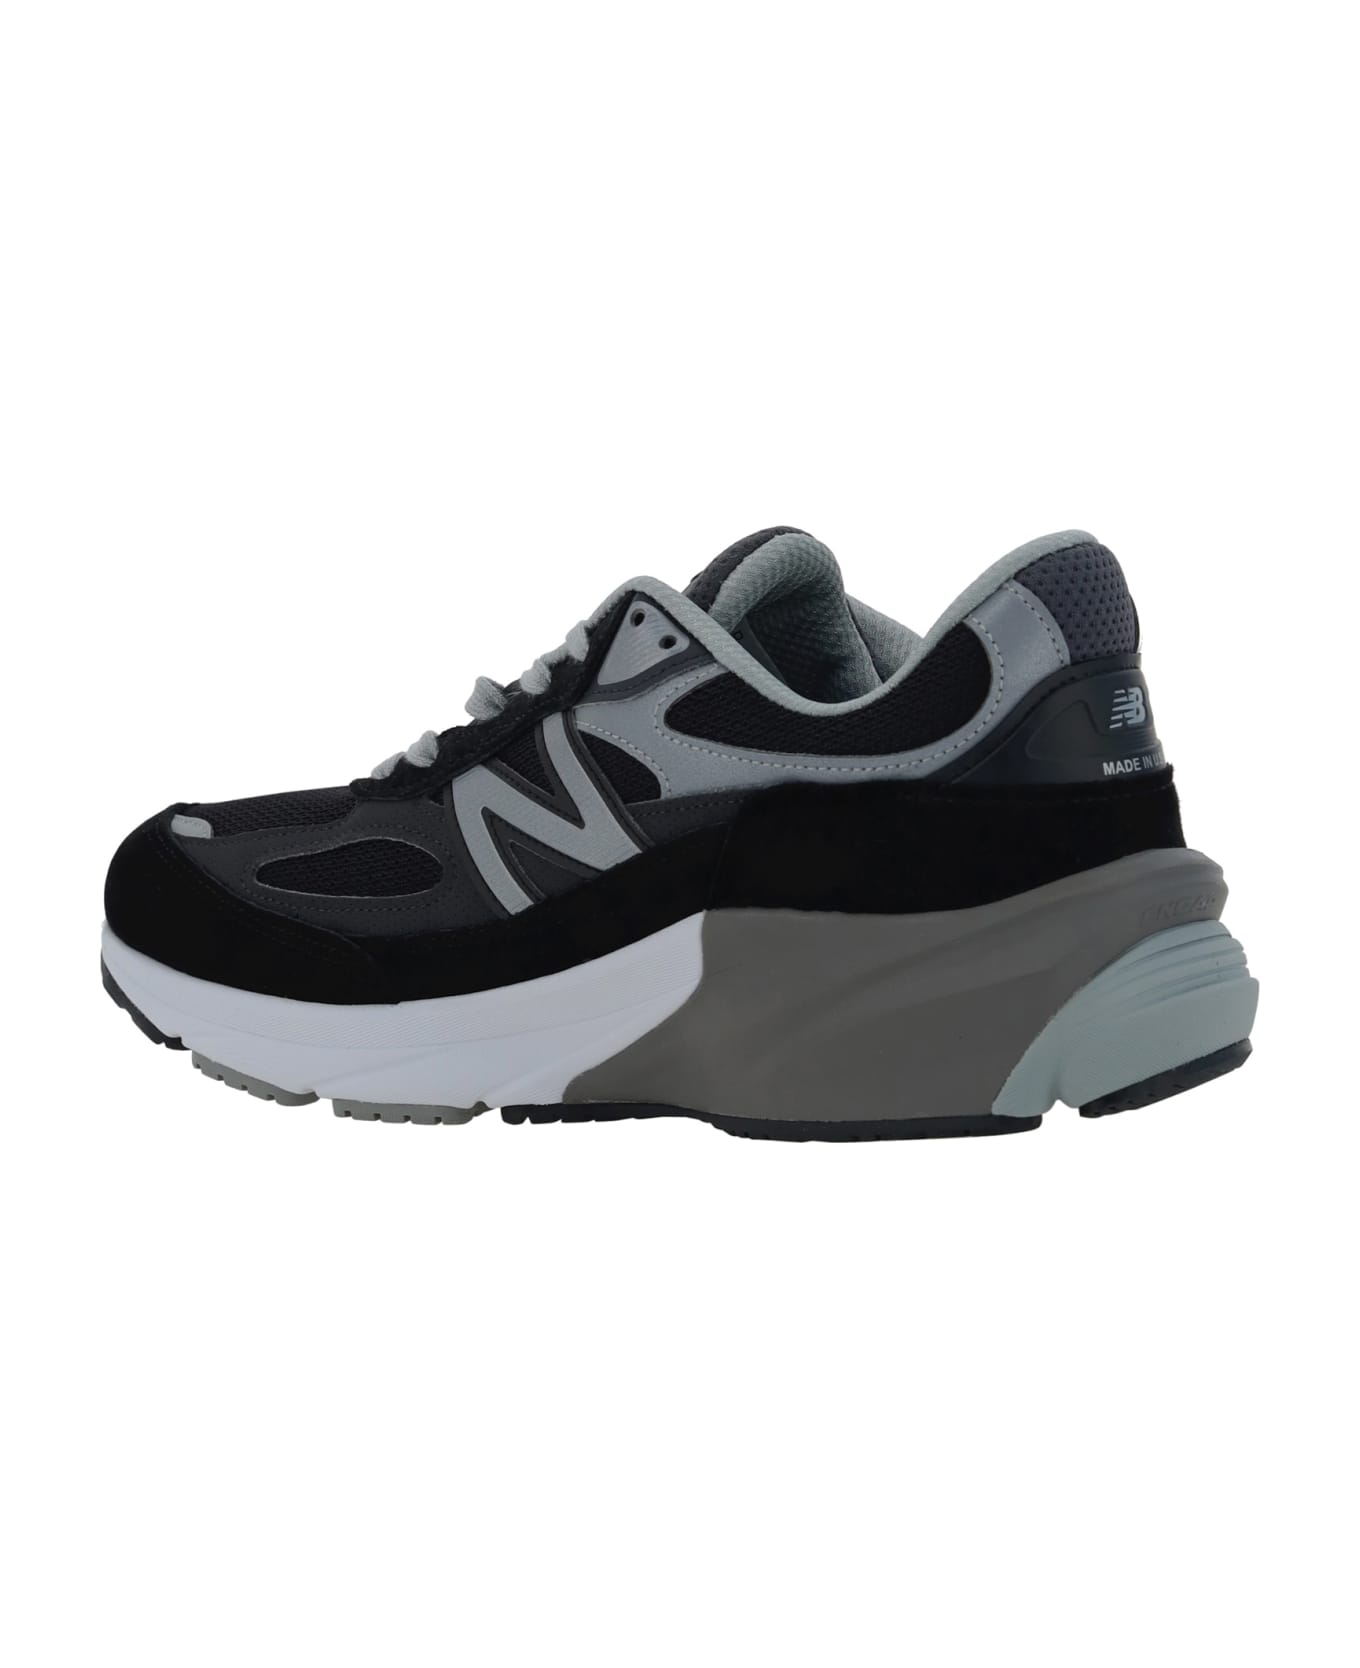 New Balance M990bk6 Sneakers - Black